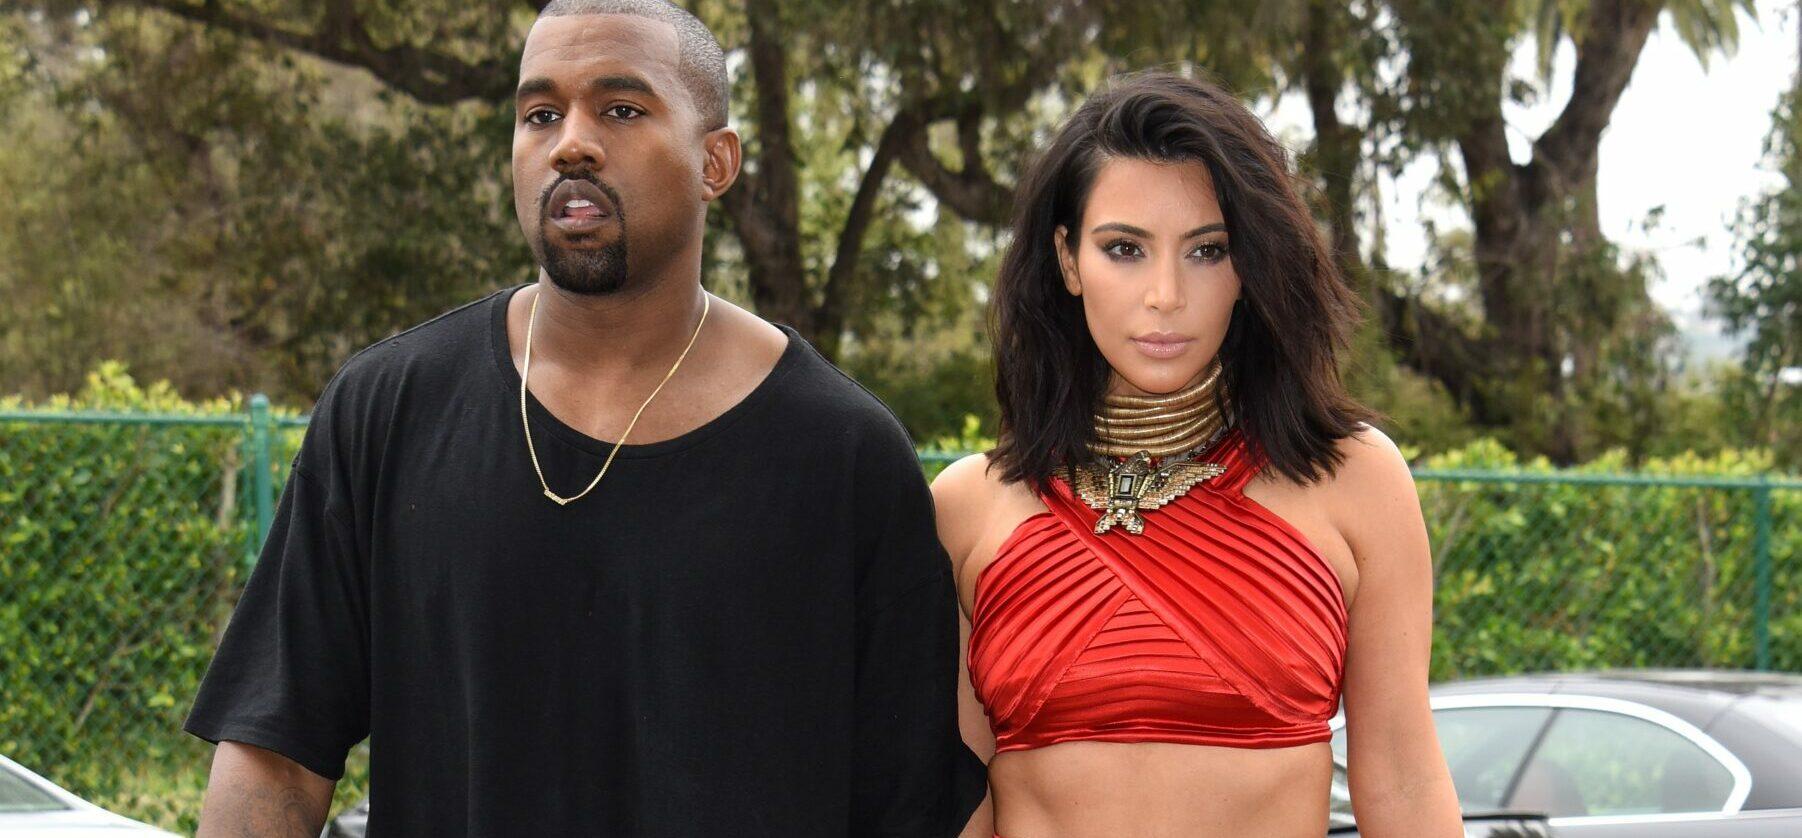 Kim Kardashian And Kanye West Take Family Vacation Amid Ongoing Divorce